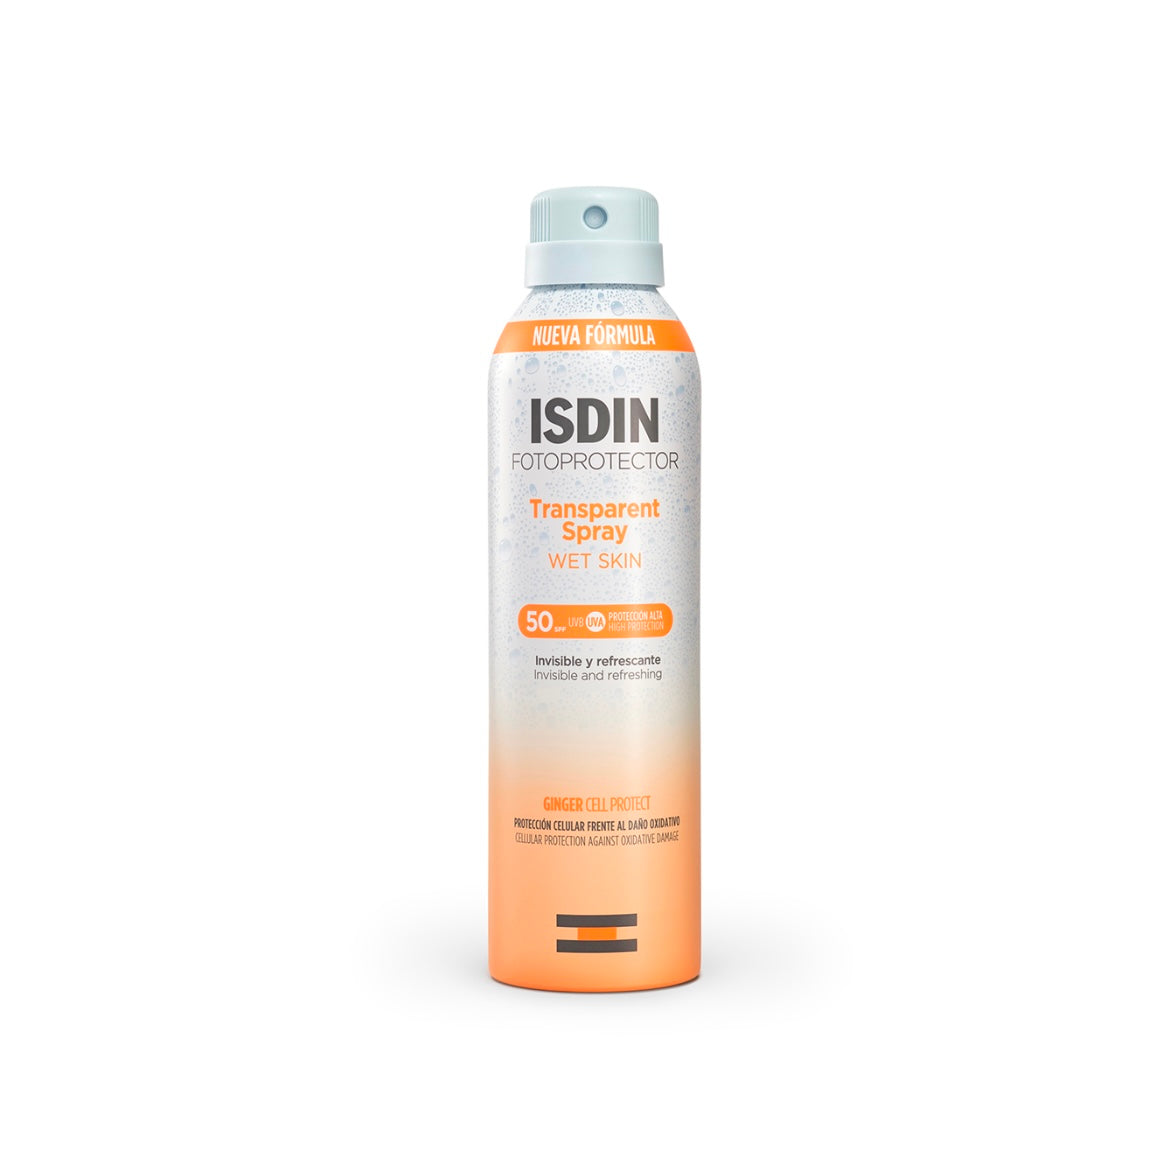 ISDIN Transparent Spray Wet Skin Corporal SPF 50